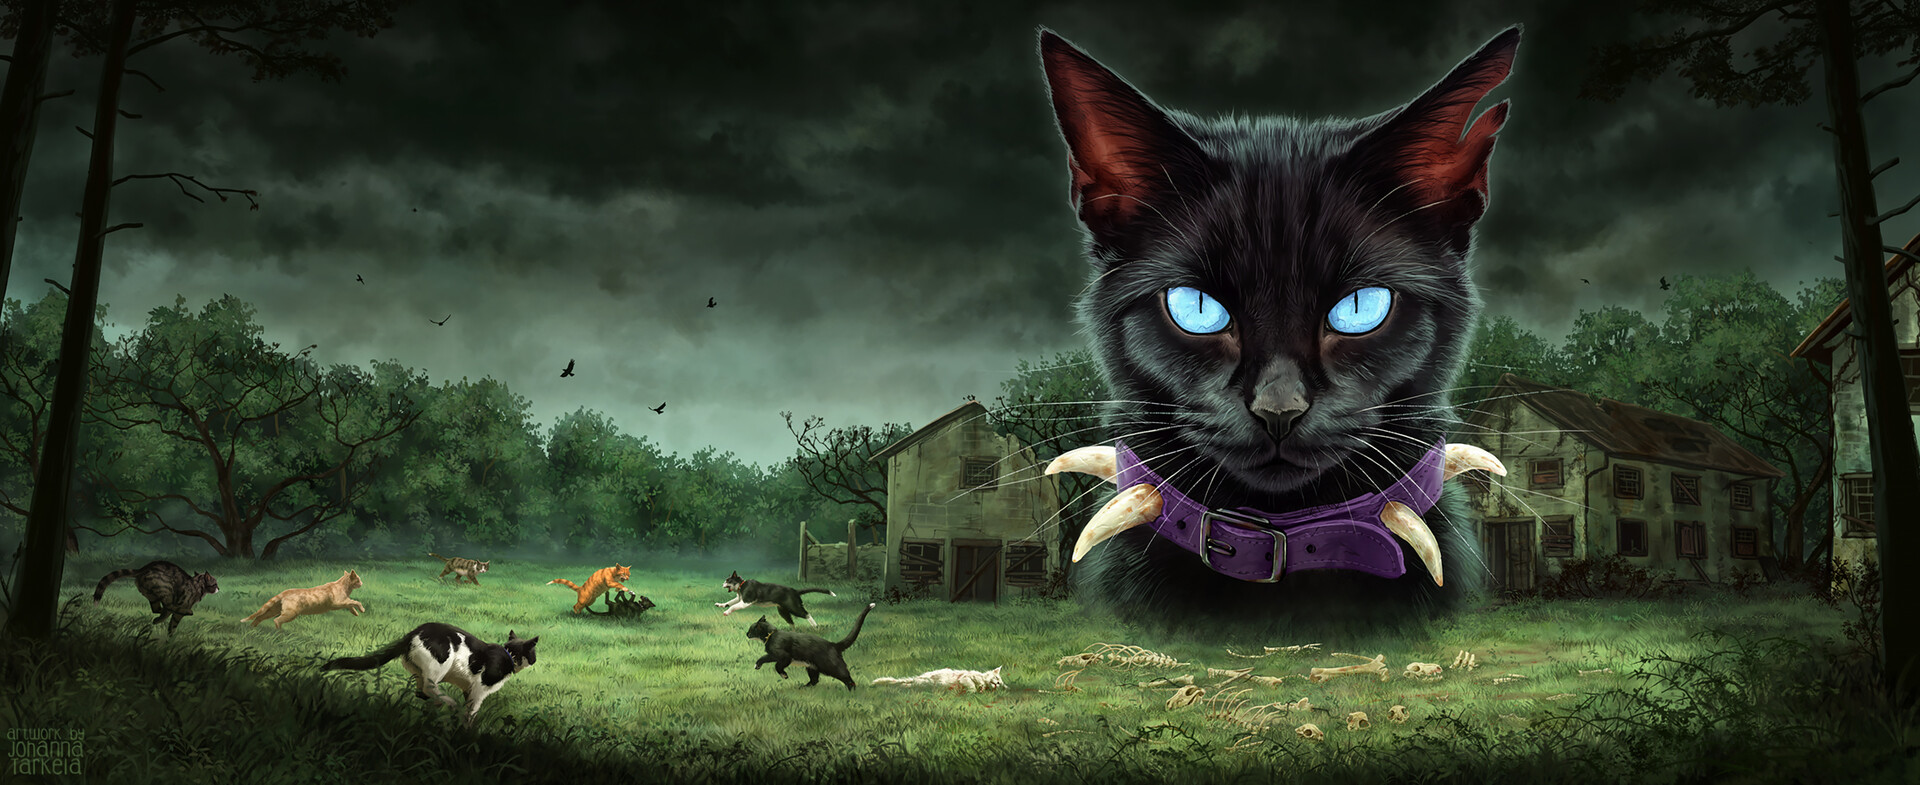 THE PROPHECIES BEGIN  Warrior Cats TRAILER (Fanmade) 